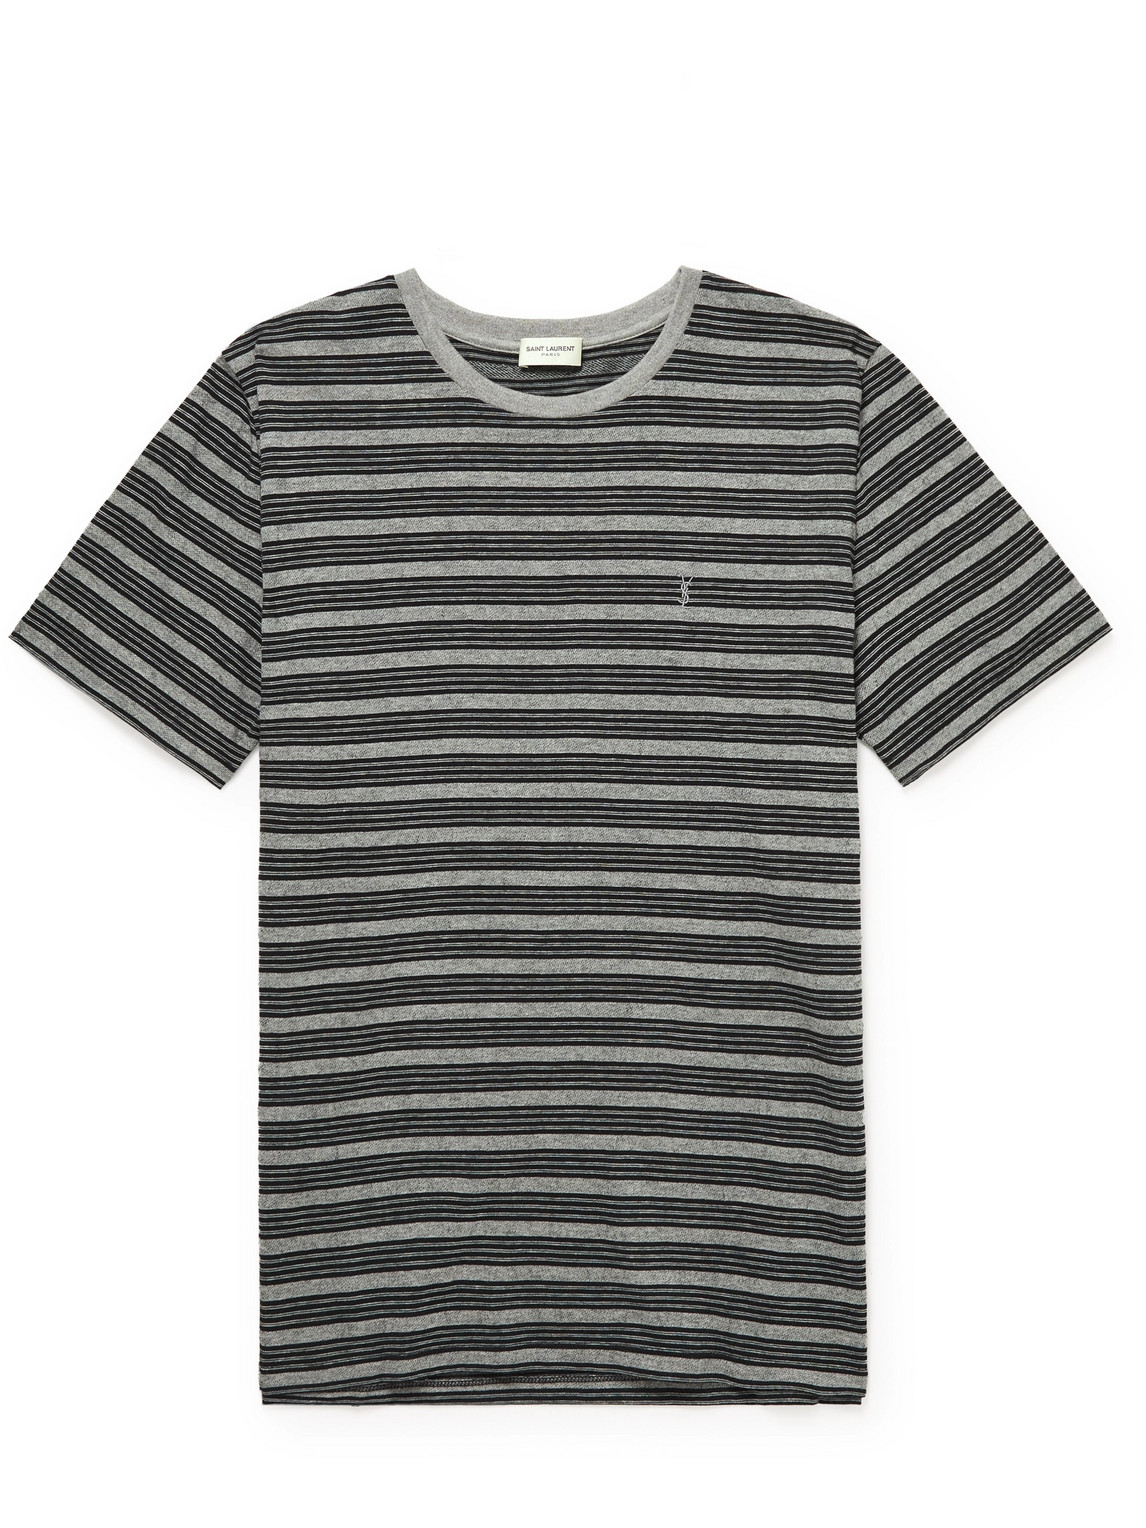 SAINT LAURENT Logo-Embroidered Striped Cotton-Jersey T-Shirt